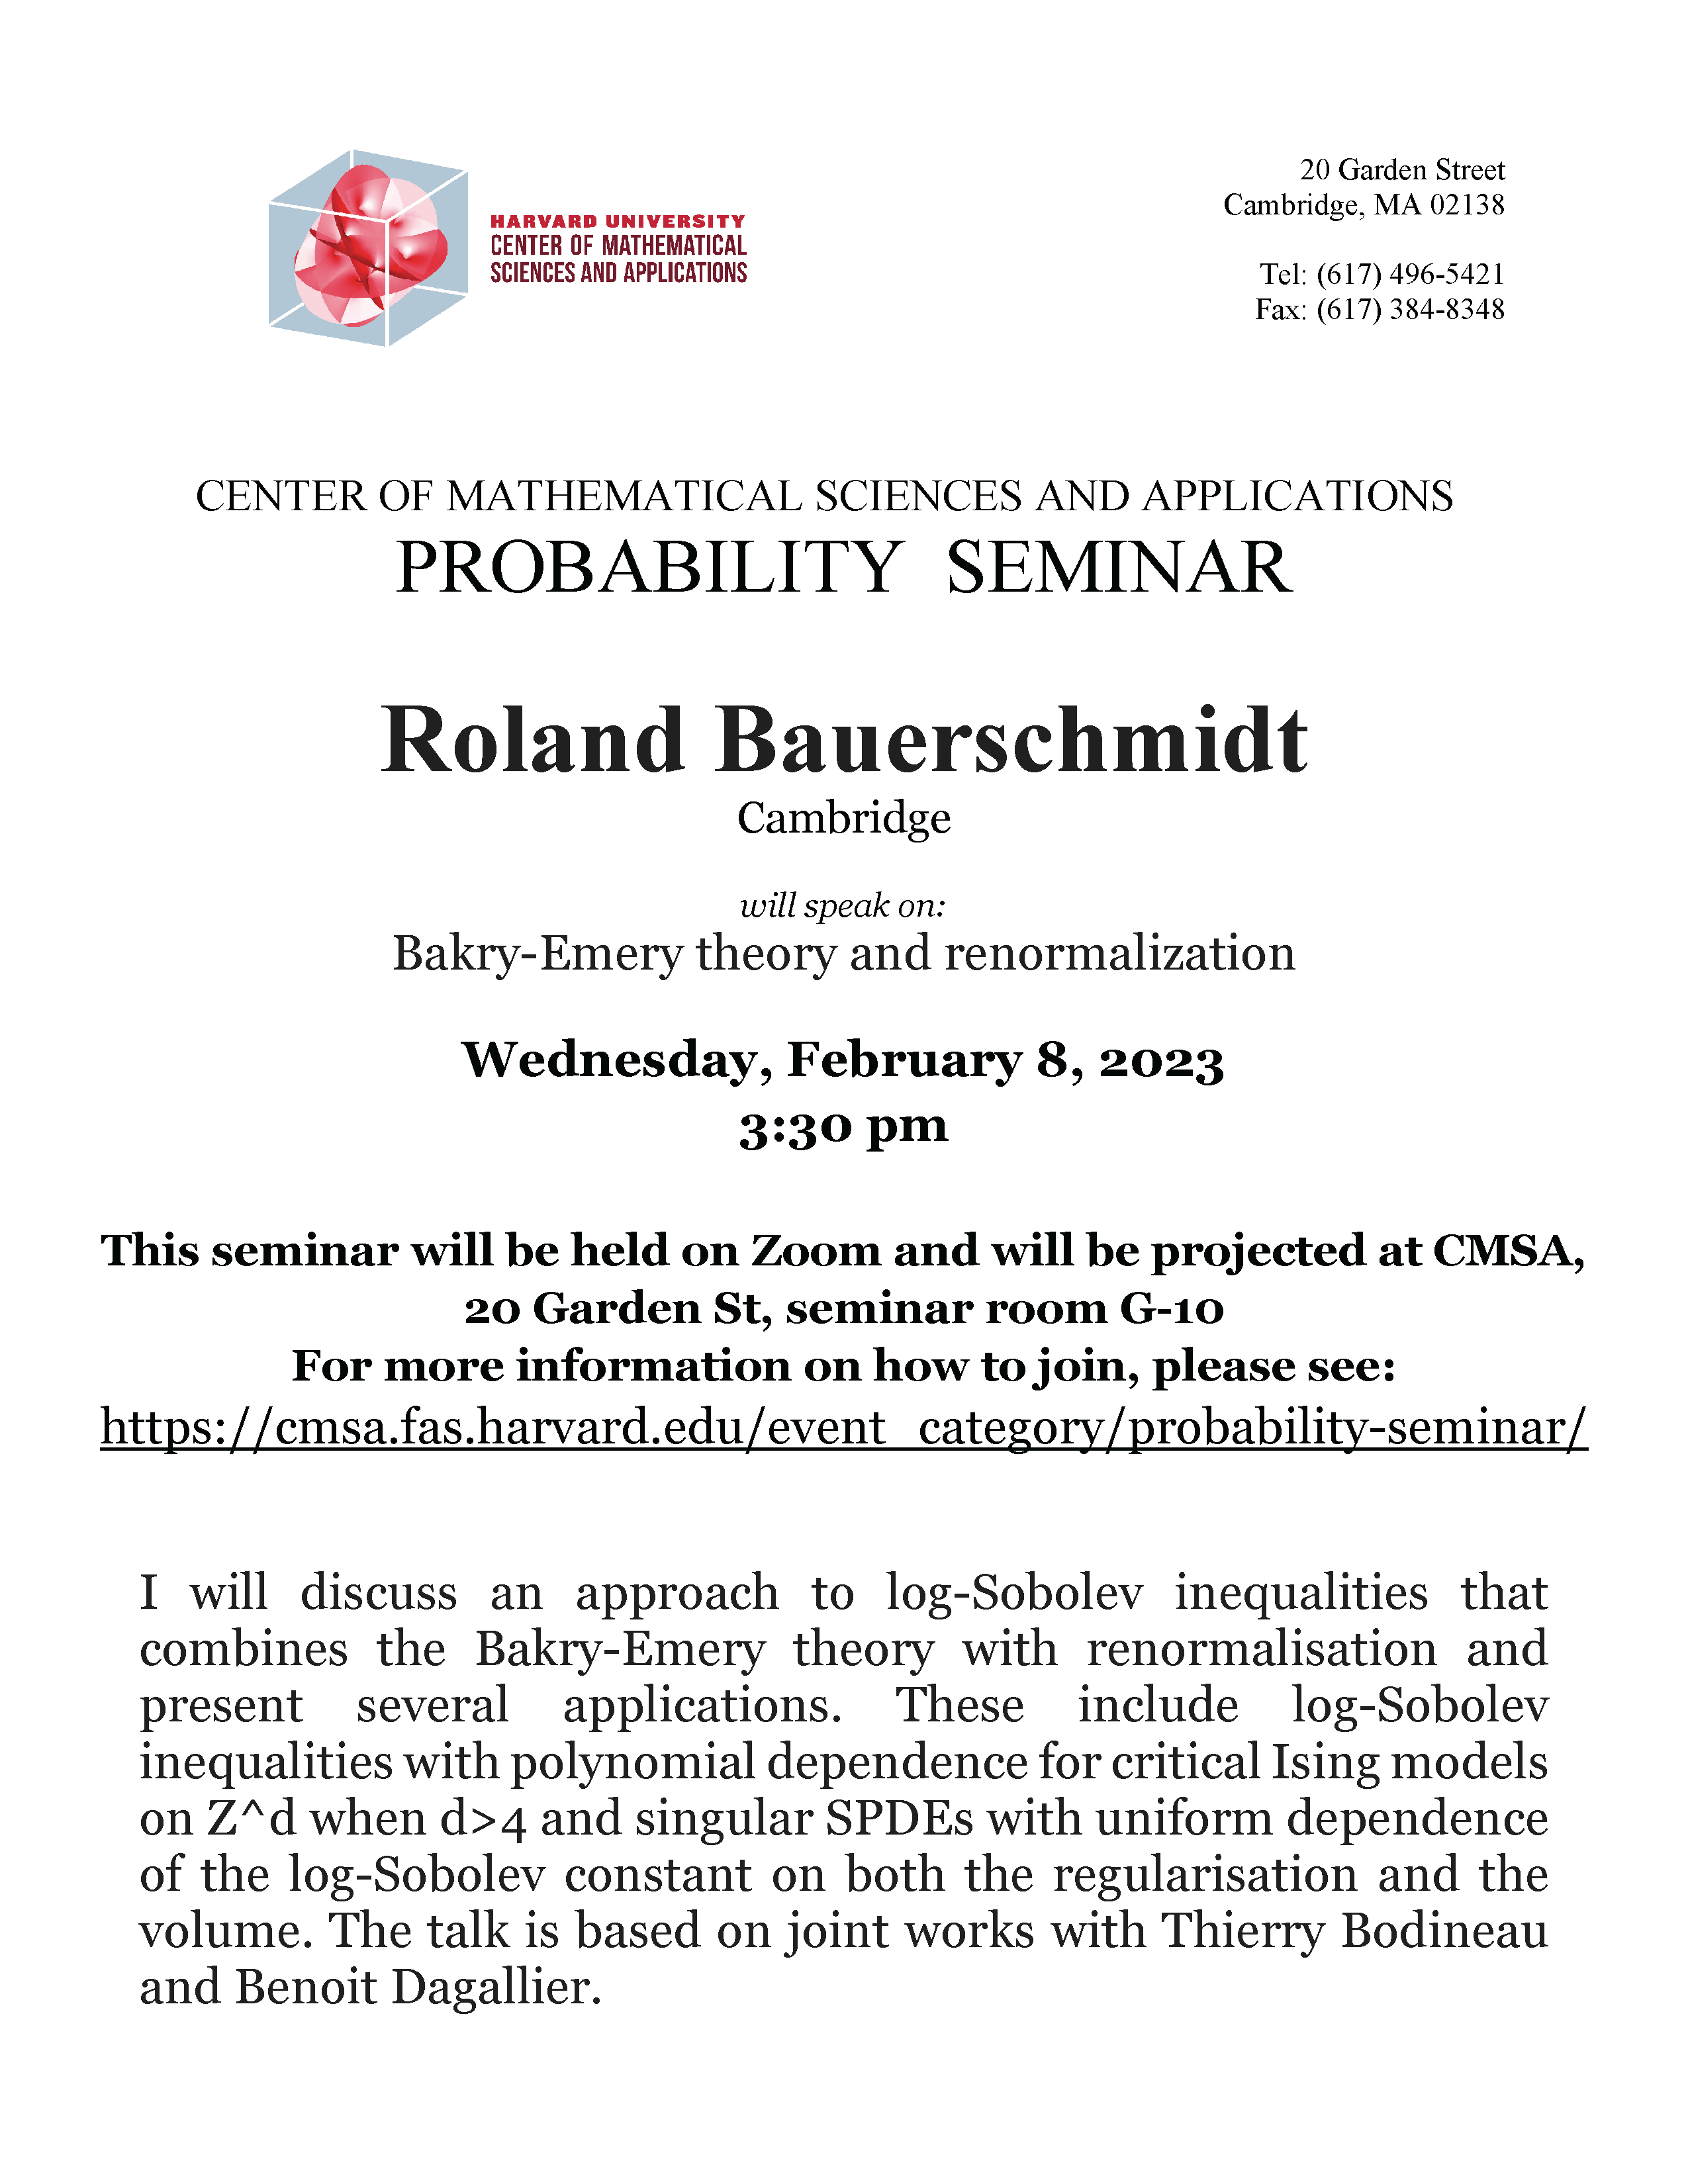 CMSA Probability Seminar 02.08.23